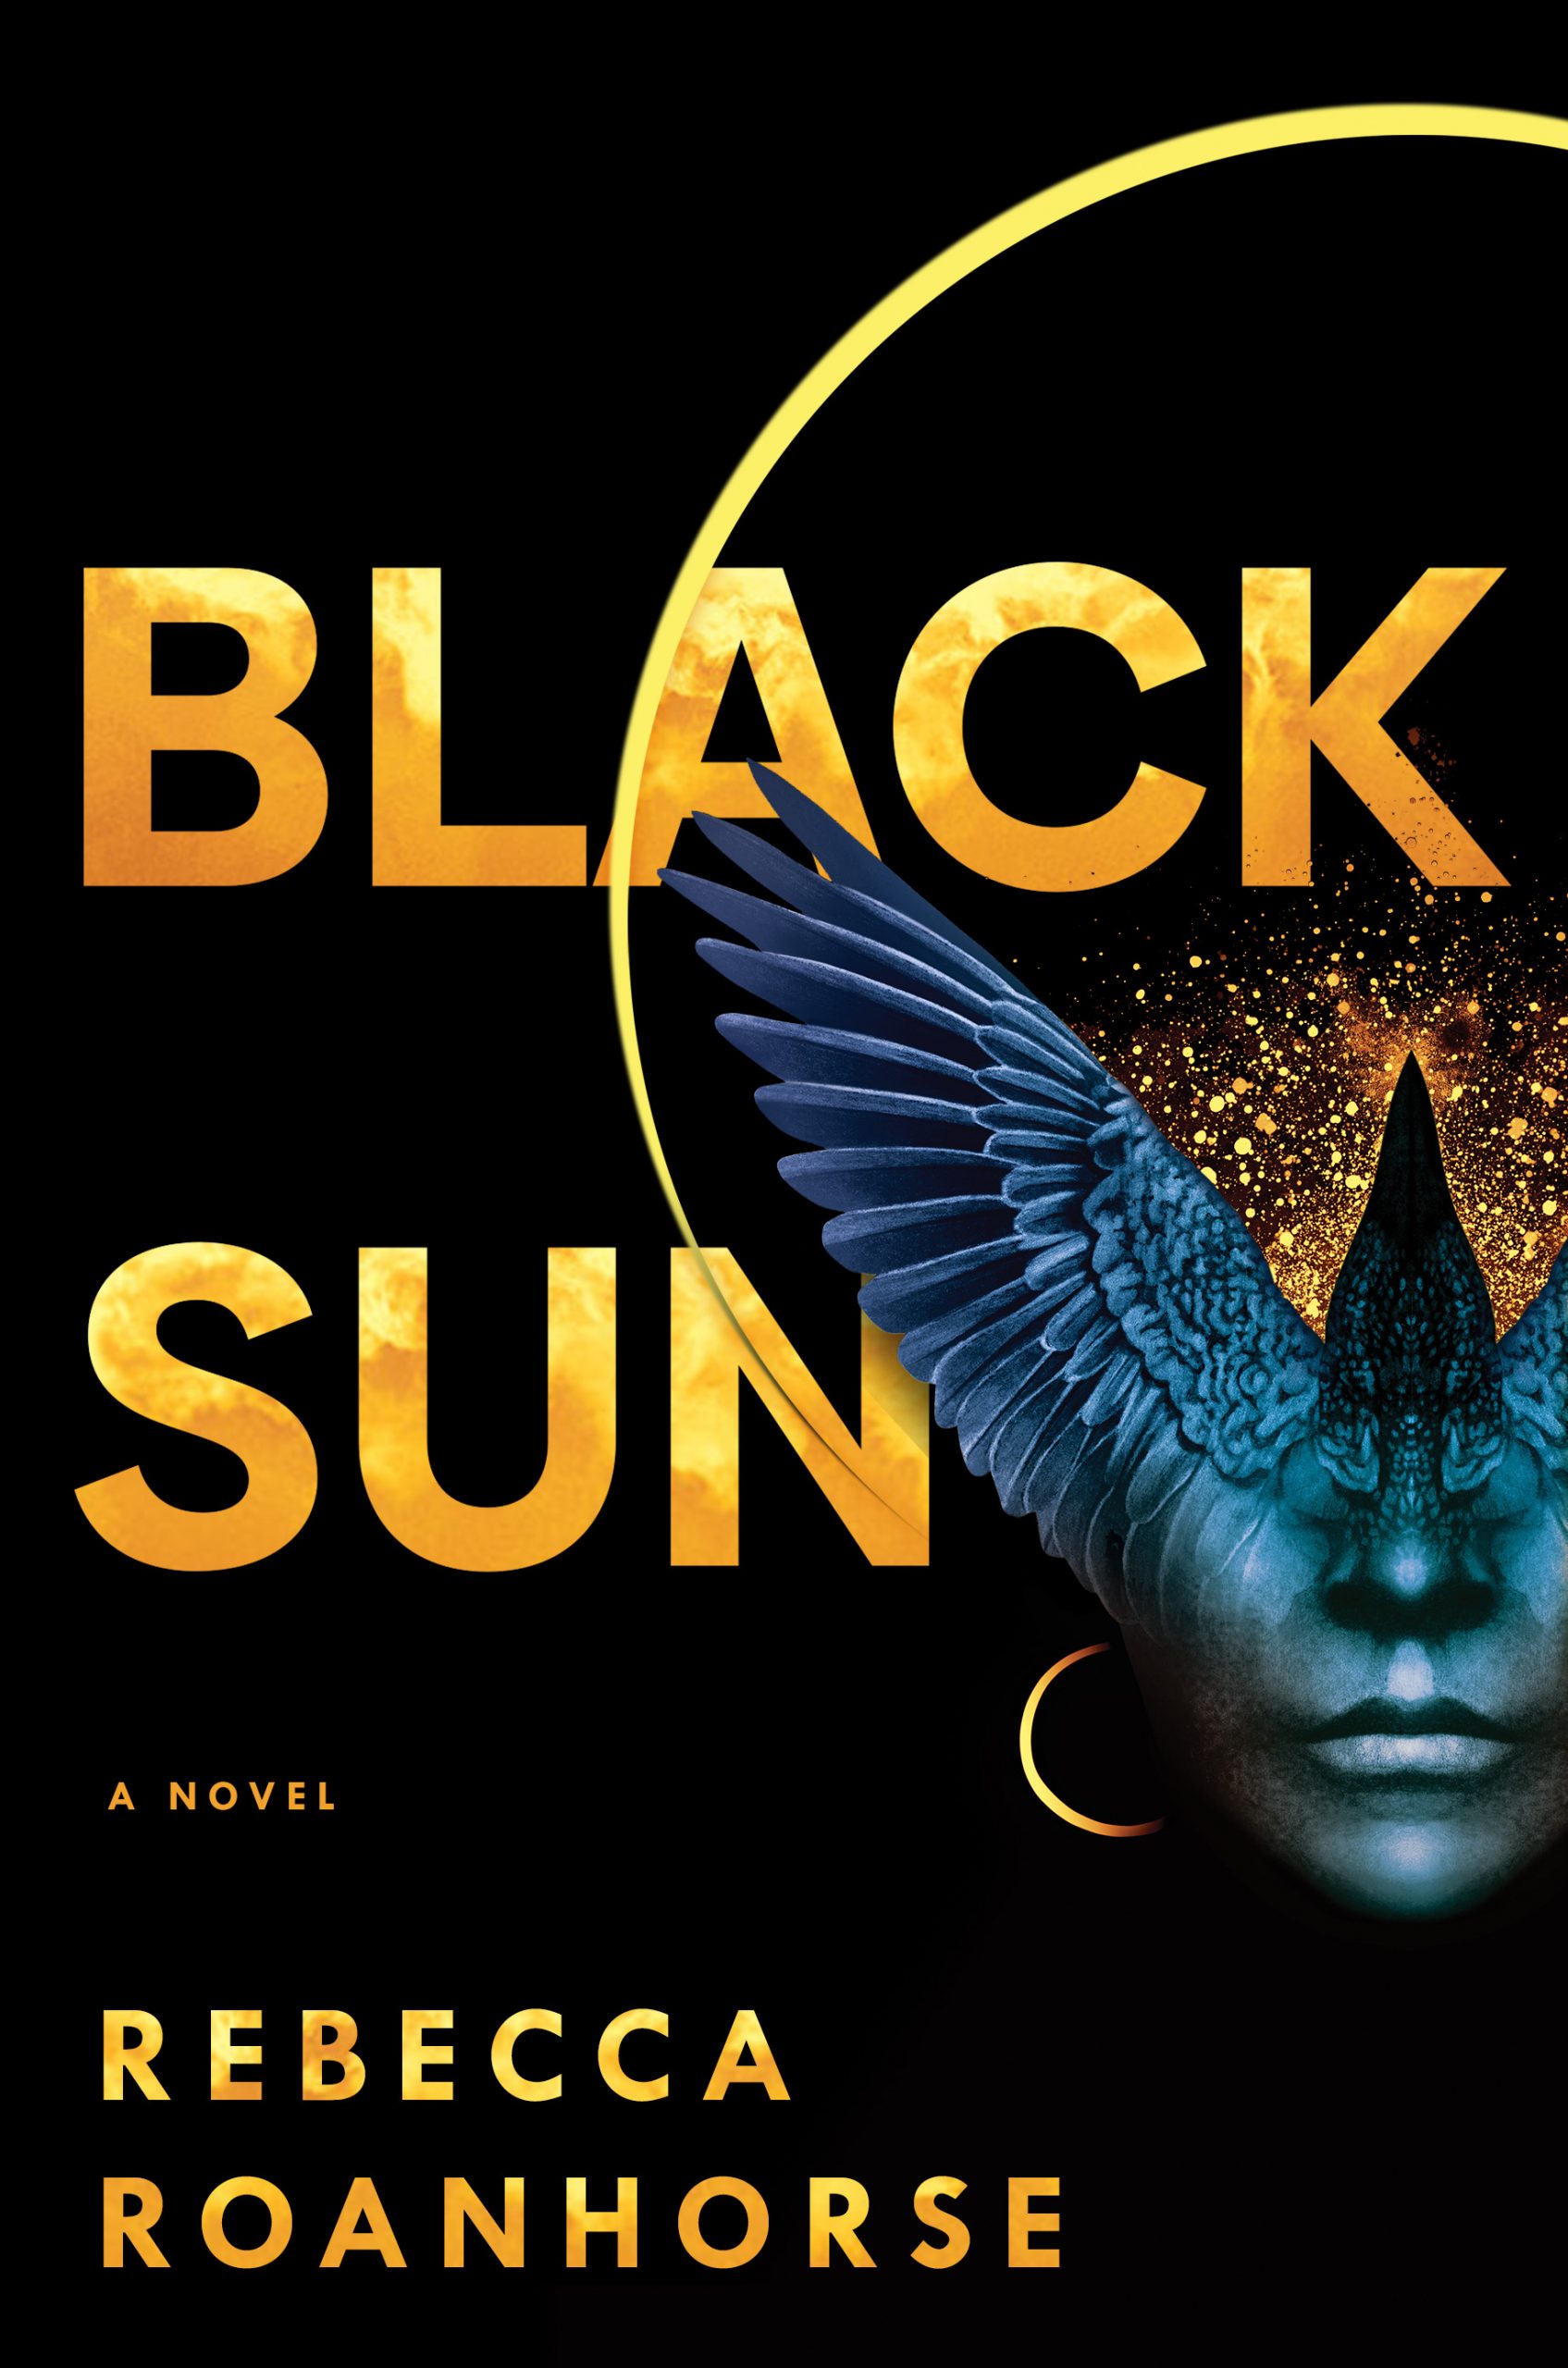 Cover for 'Black Sun' by Rebecca Roanhorse